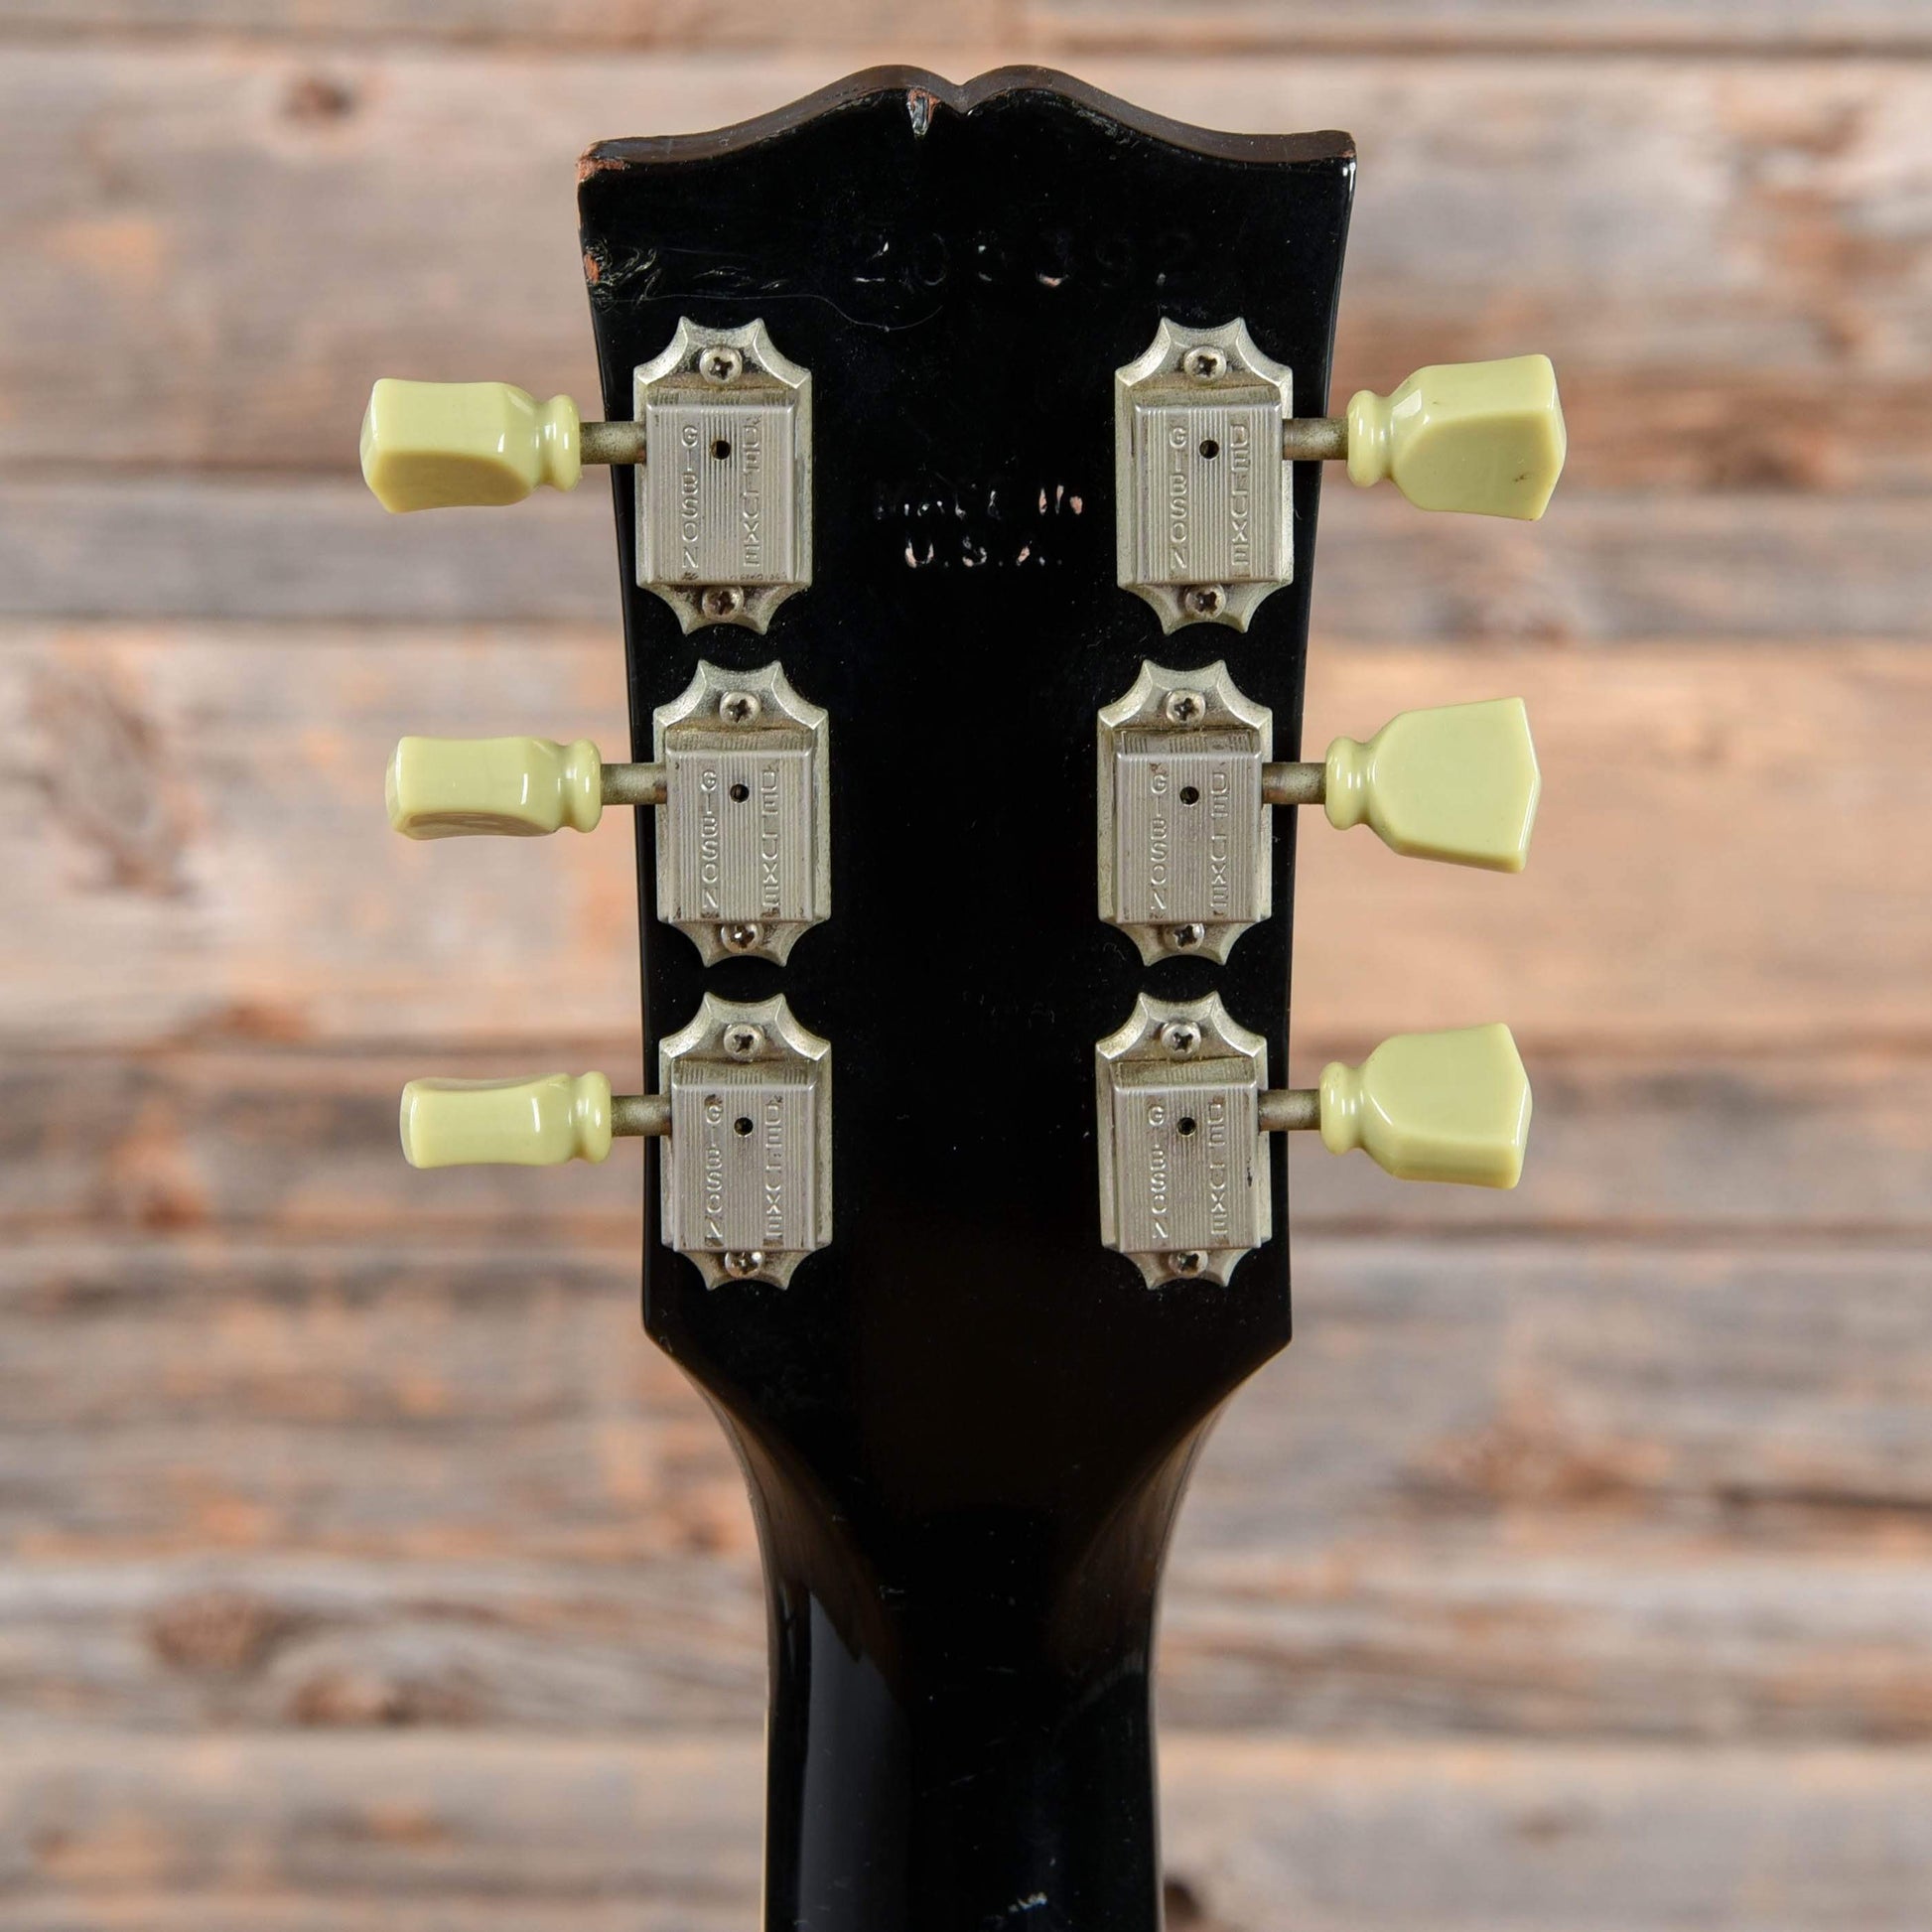 Gibson Les Paul Standard Ebony 1995 Electric Guitars / Solid Body